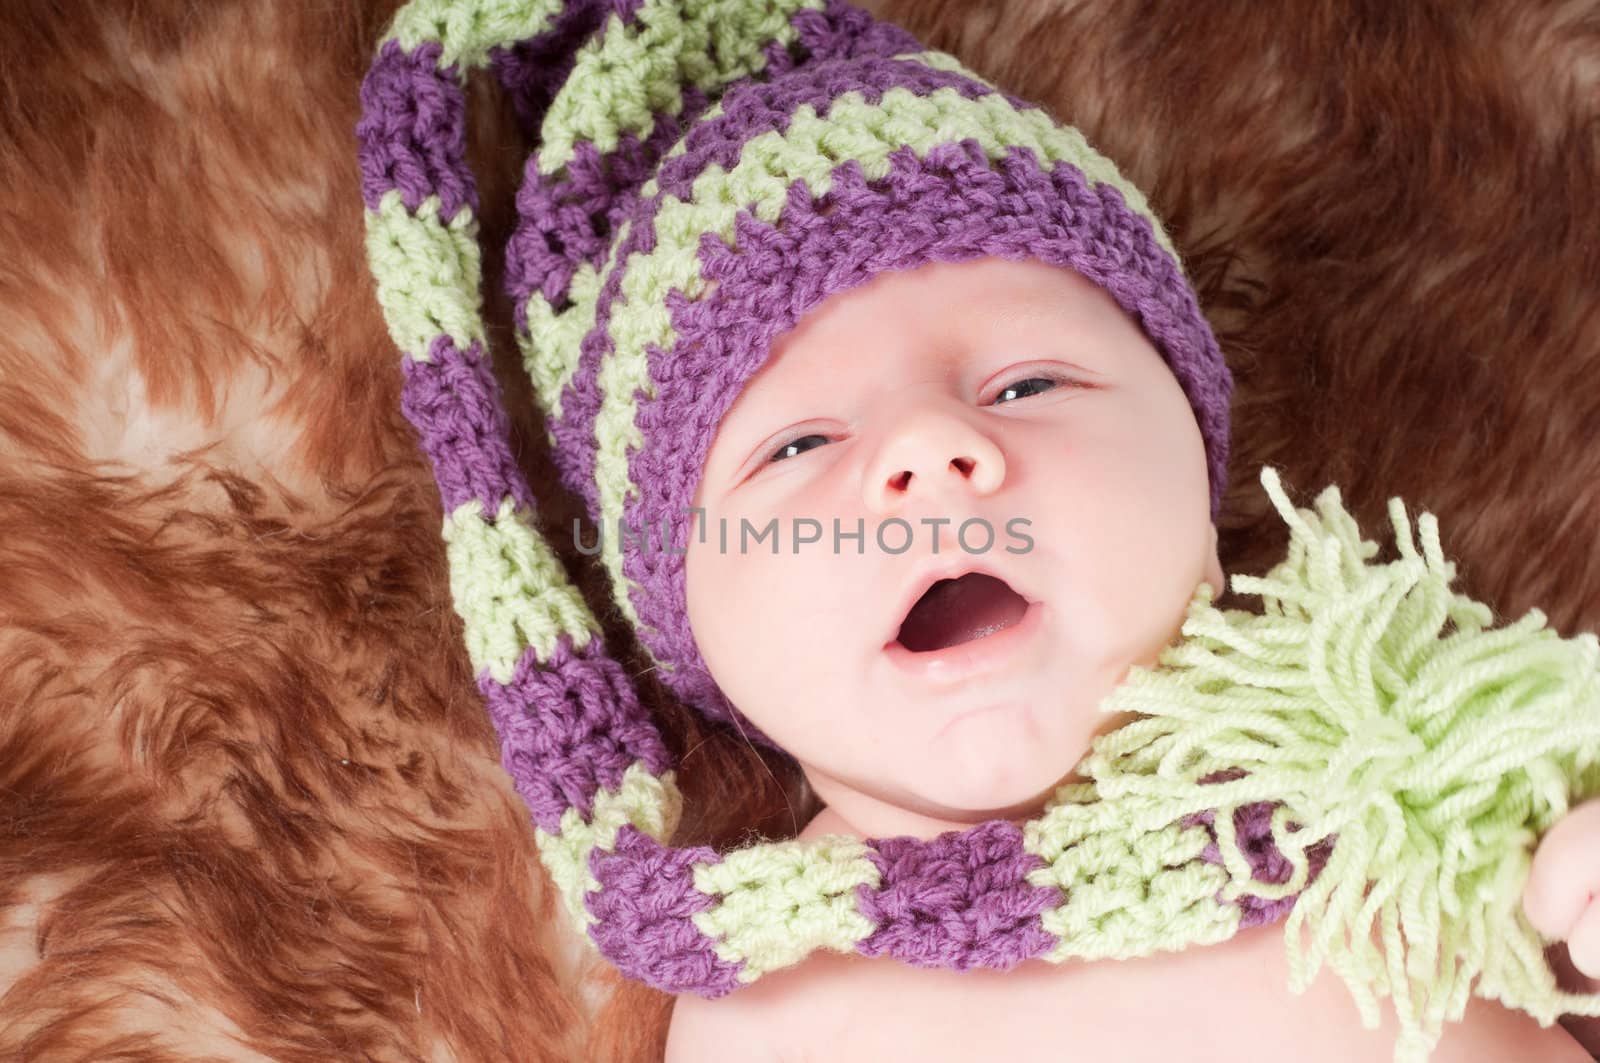 Shot of newborn baby in long knited hat lying on fur